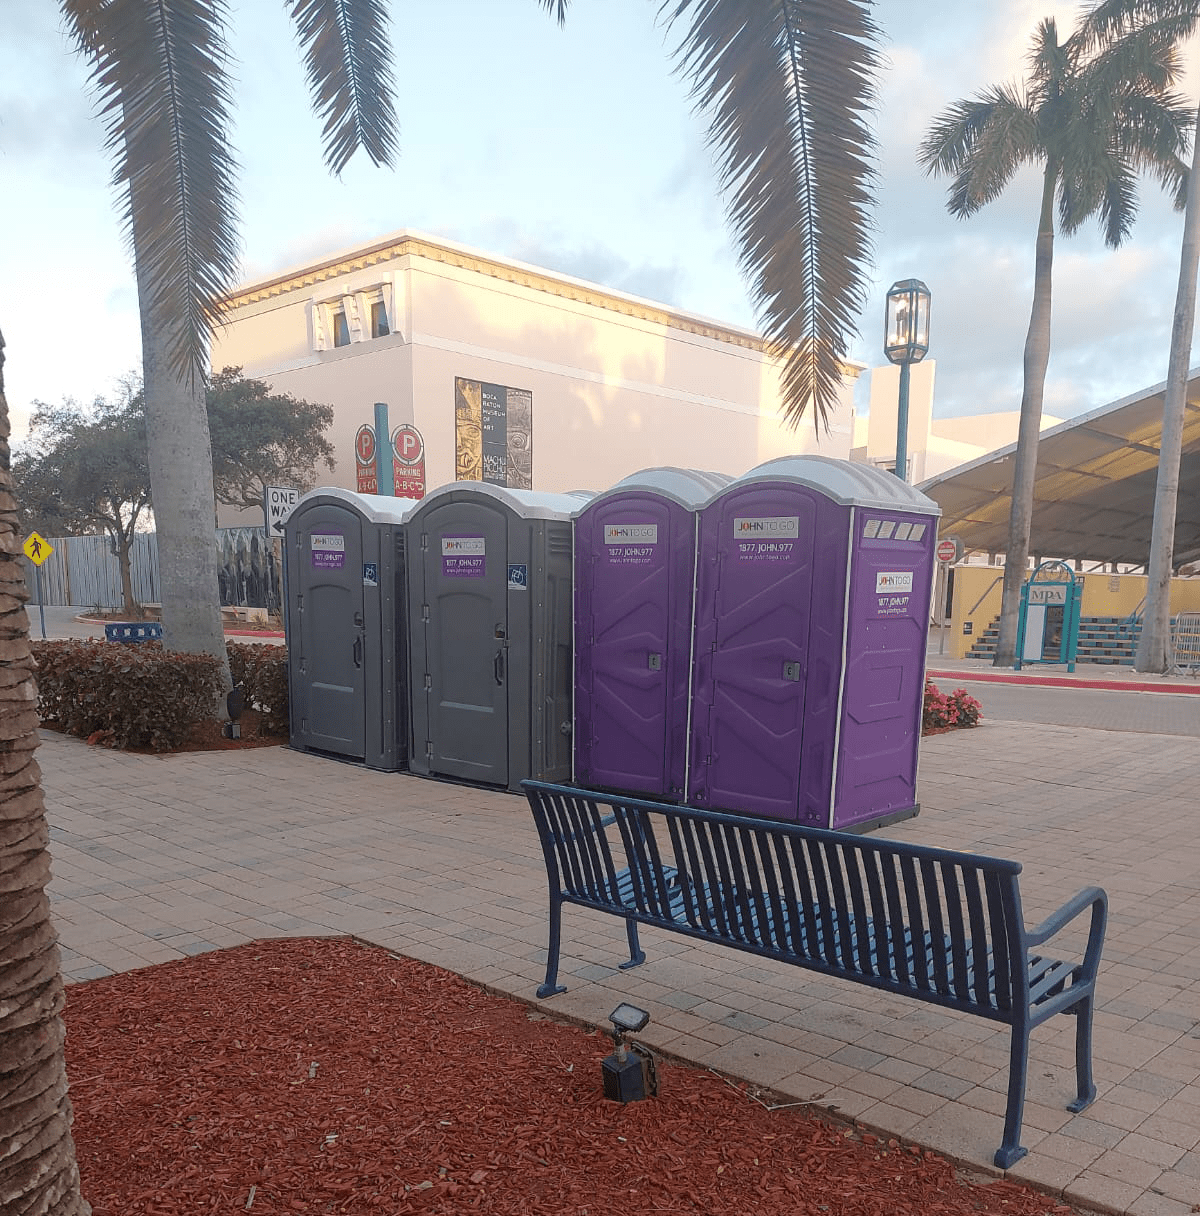 Top events in Florida need porta potties